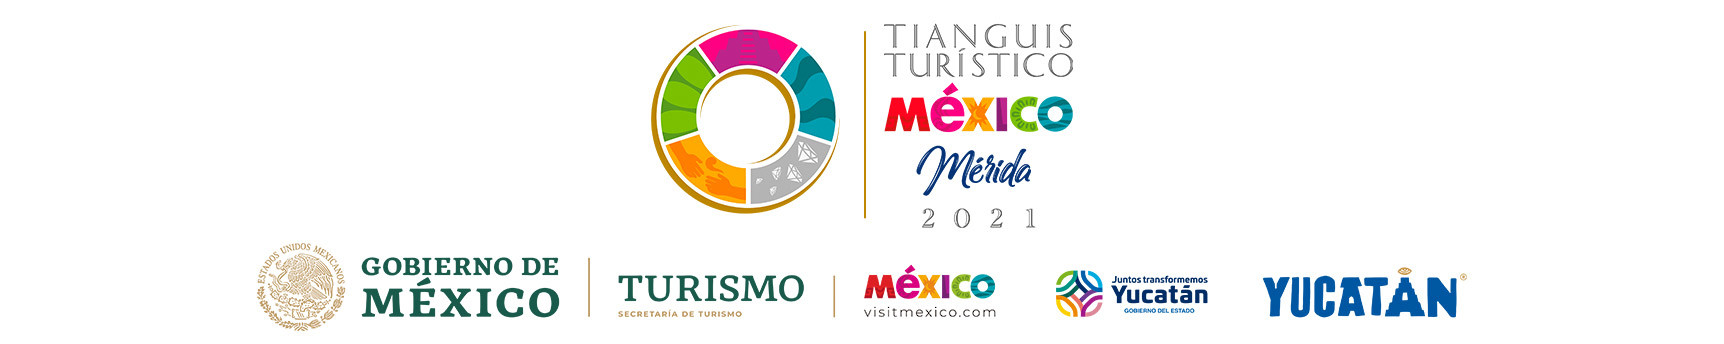 https://yucatan.travel/wp-content/uploads/2021/10/Banner-detalle-TT-Logos-2021-1724x344.jpg